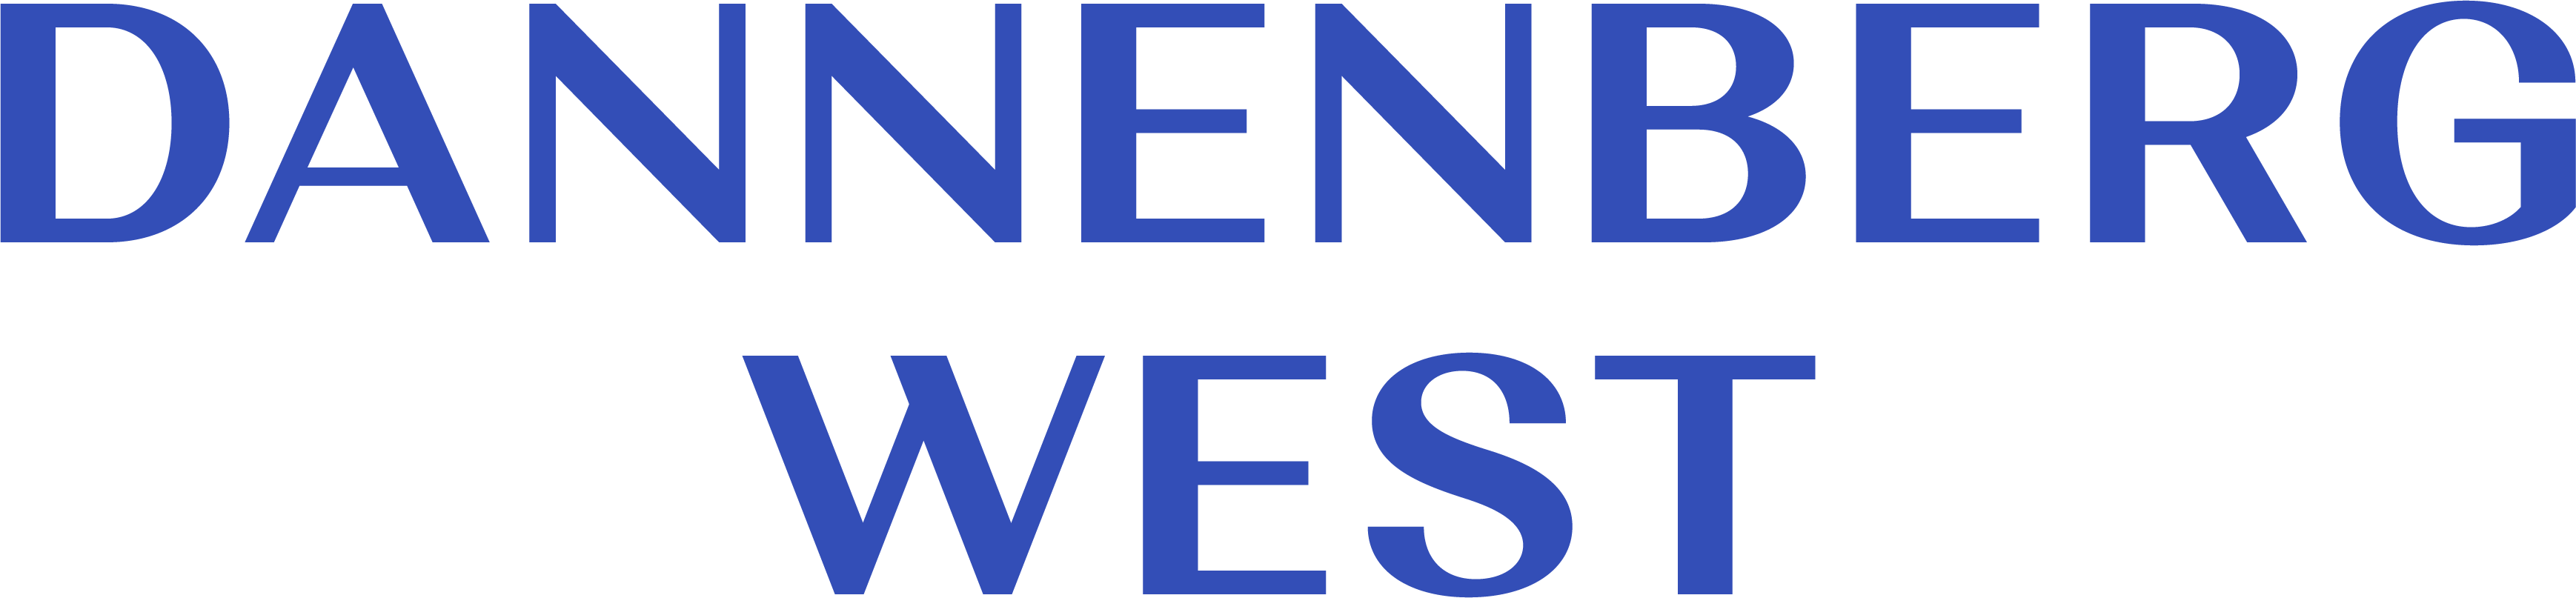 Dannenberg-West-logo